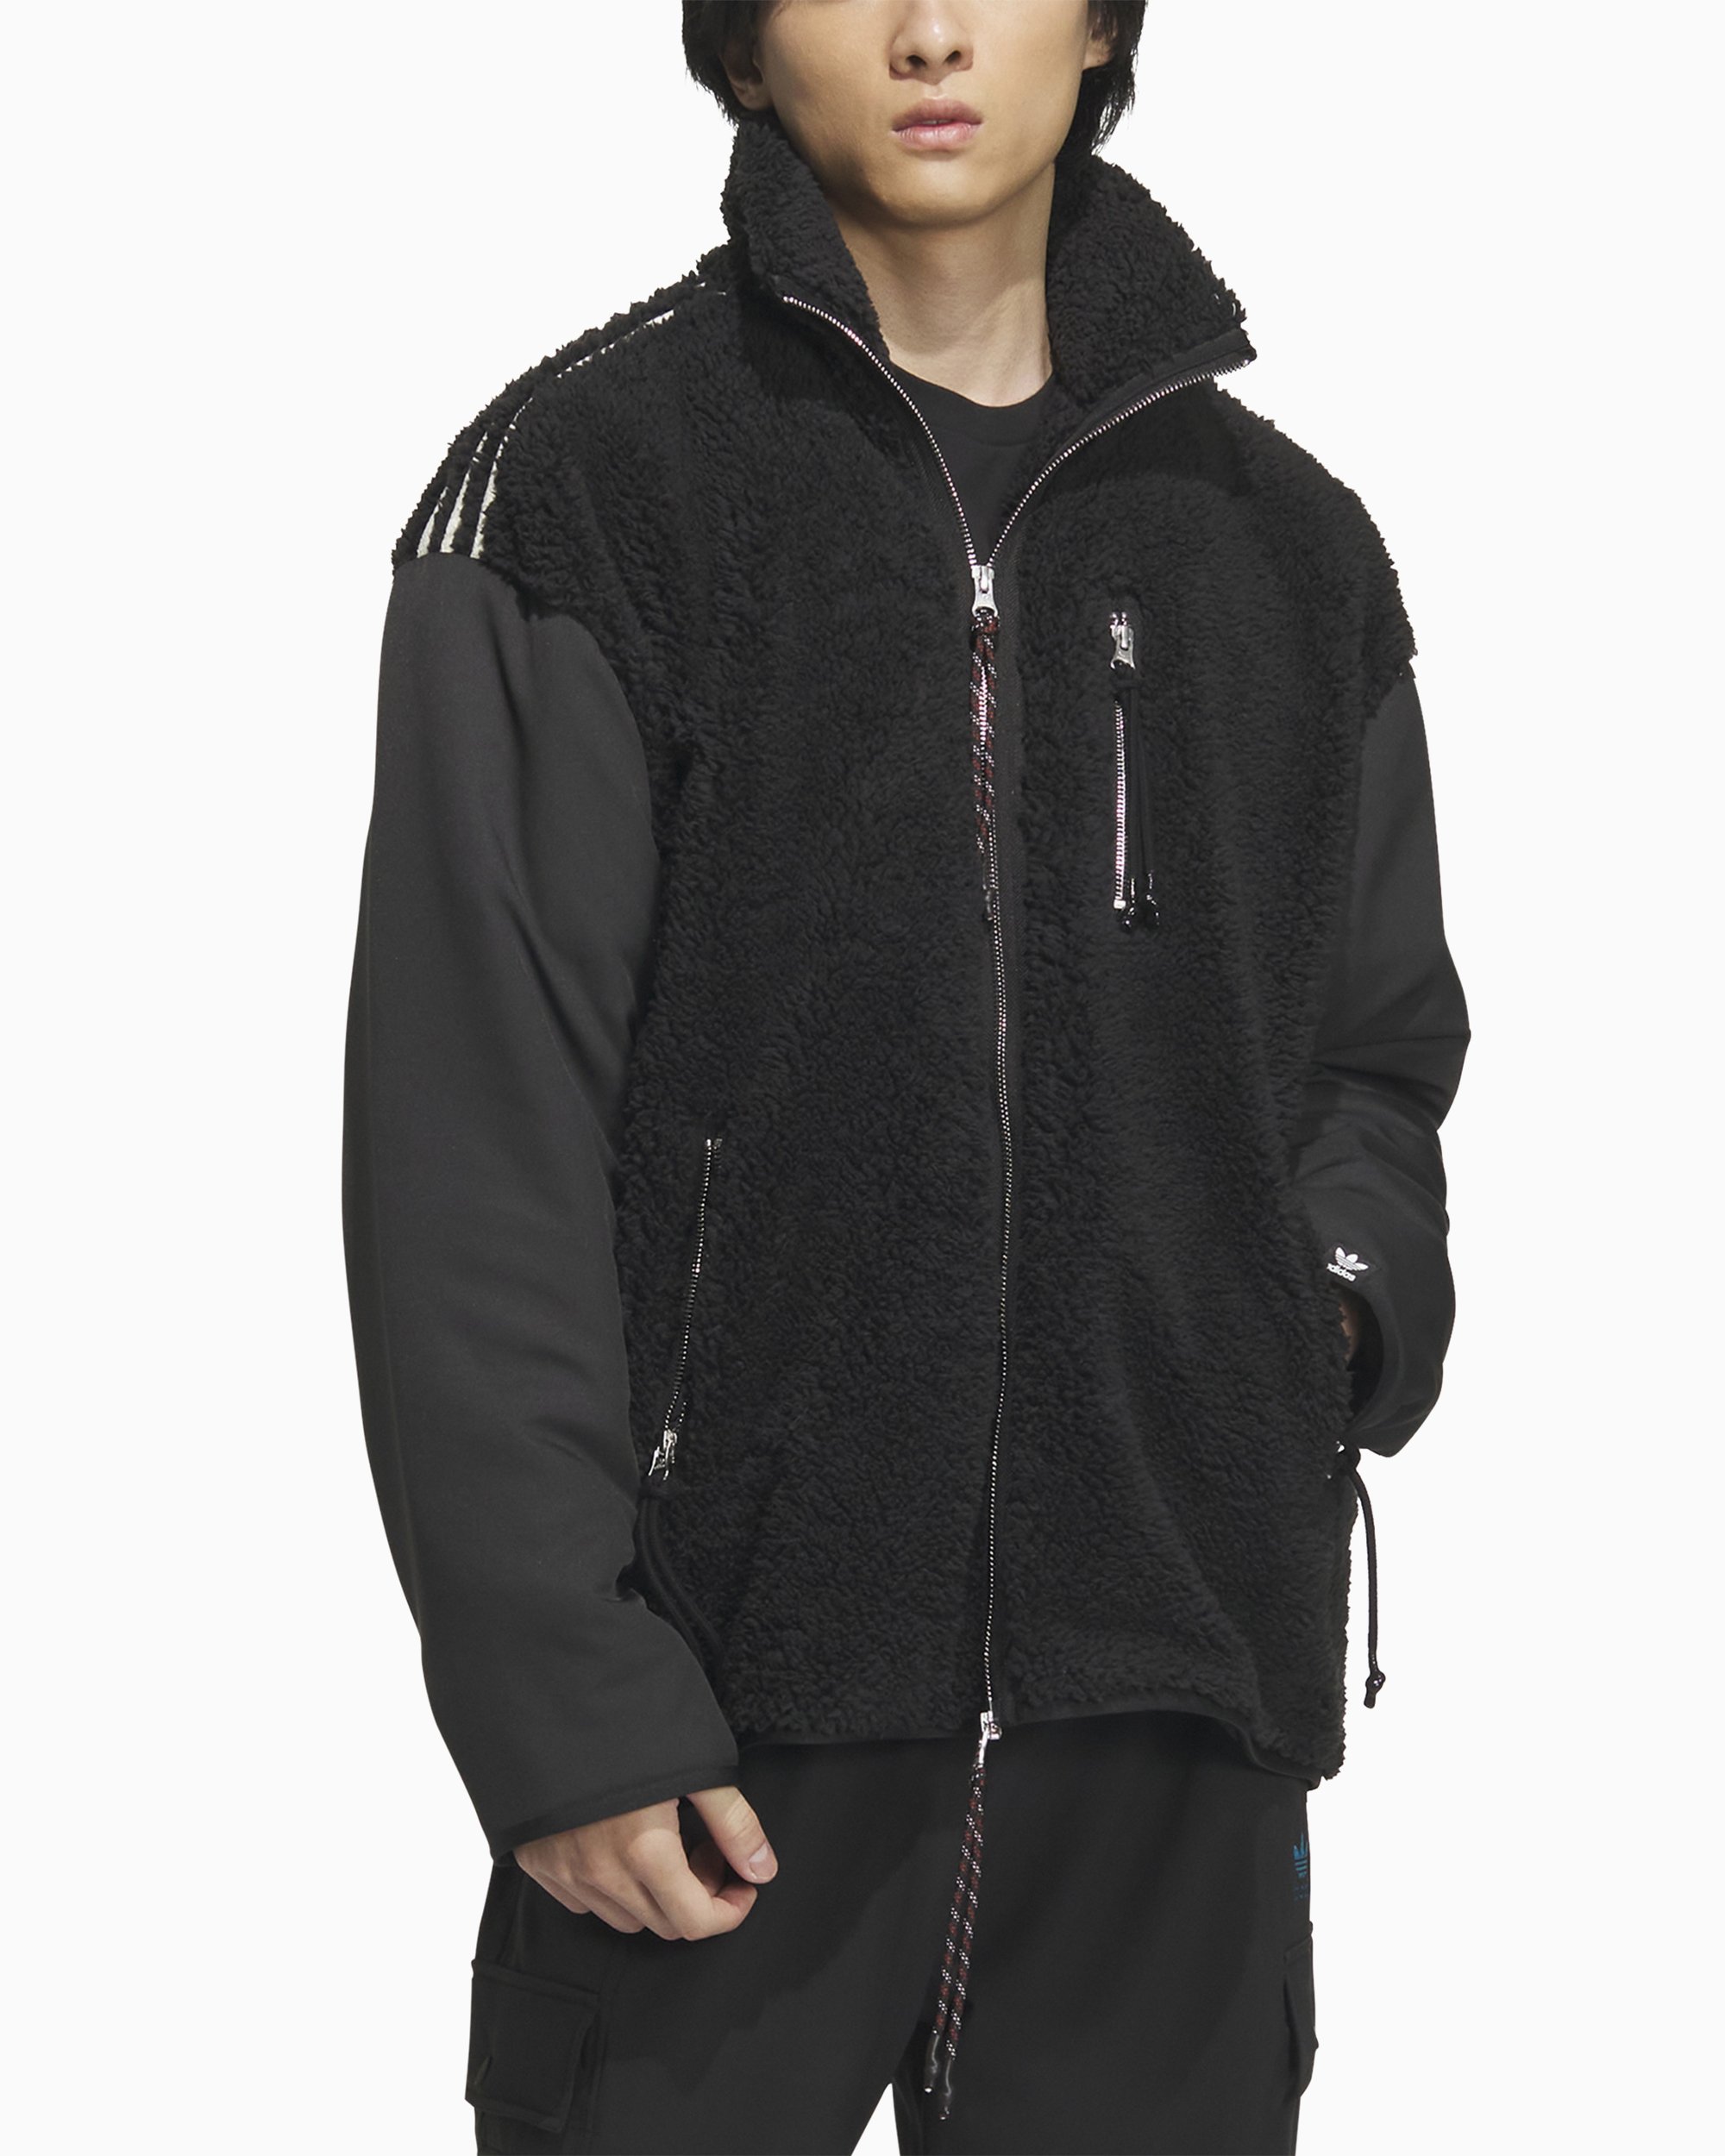 adidas Originals x Song For The Mute Unisex Fleece Jacket Black 